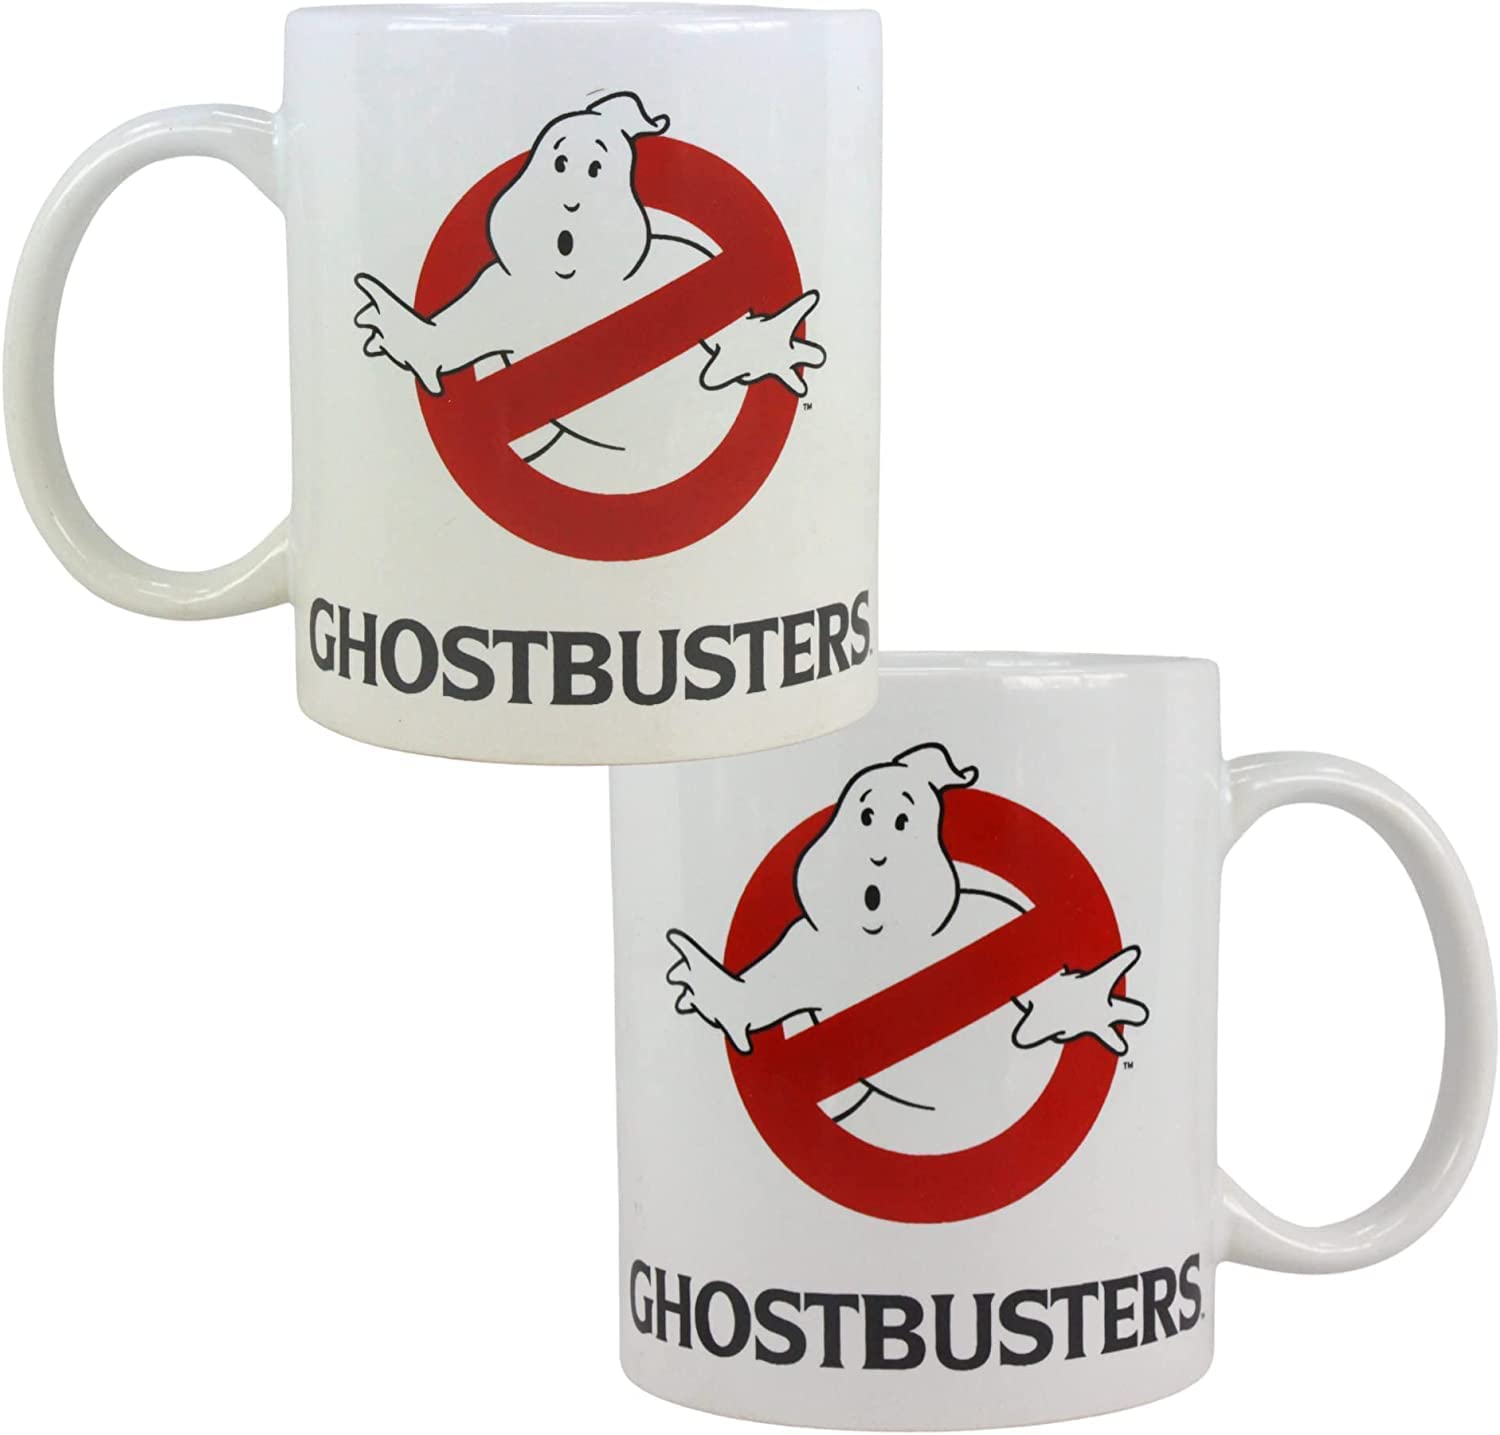 Ghostbusters 330ml Ceramic Mug Twin Packs - I Ain't Afraid of No Ghost & Ghostbuster Logo Mug - Toptoys2u